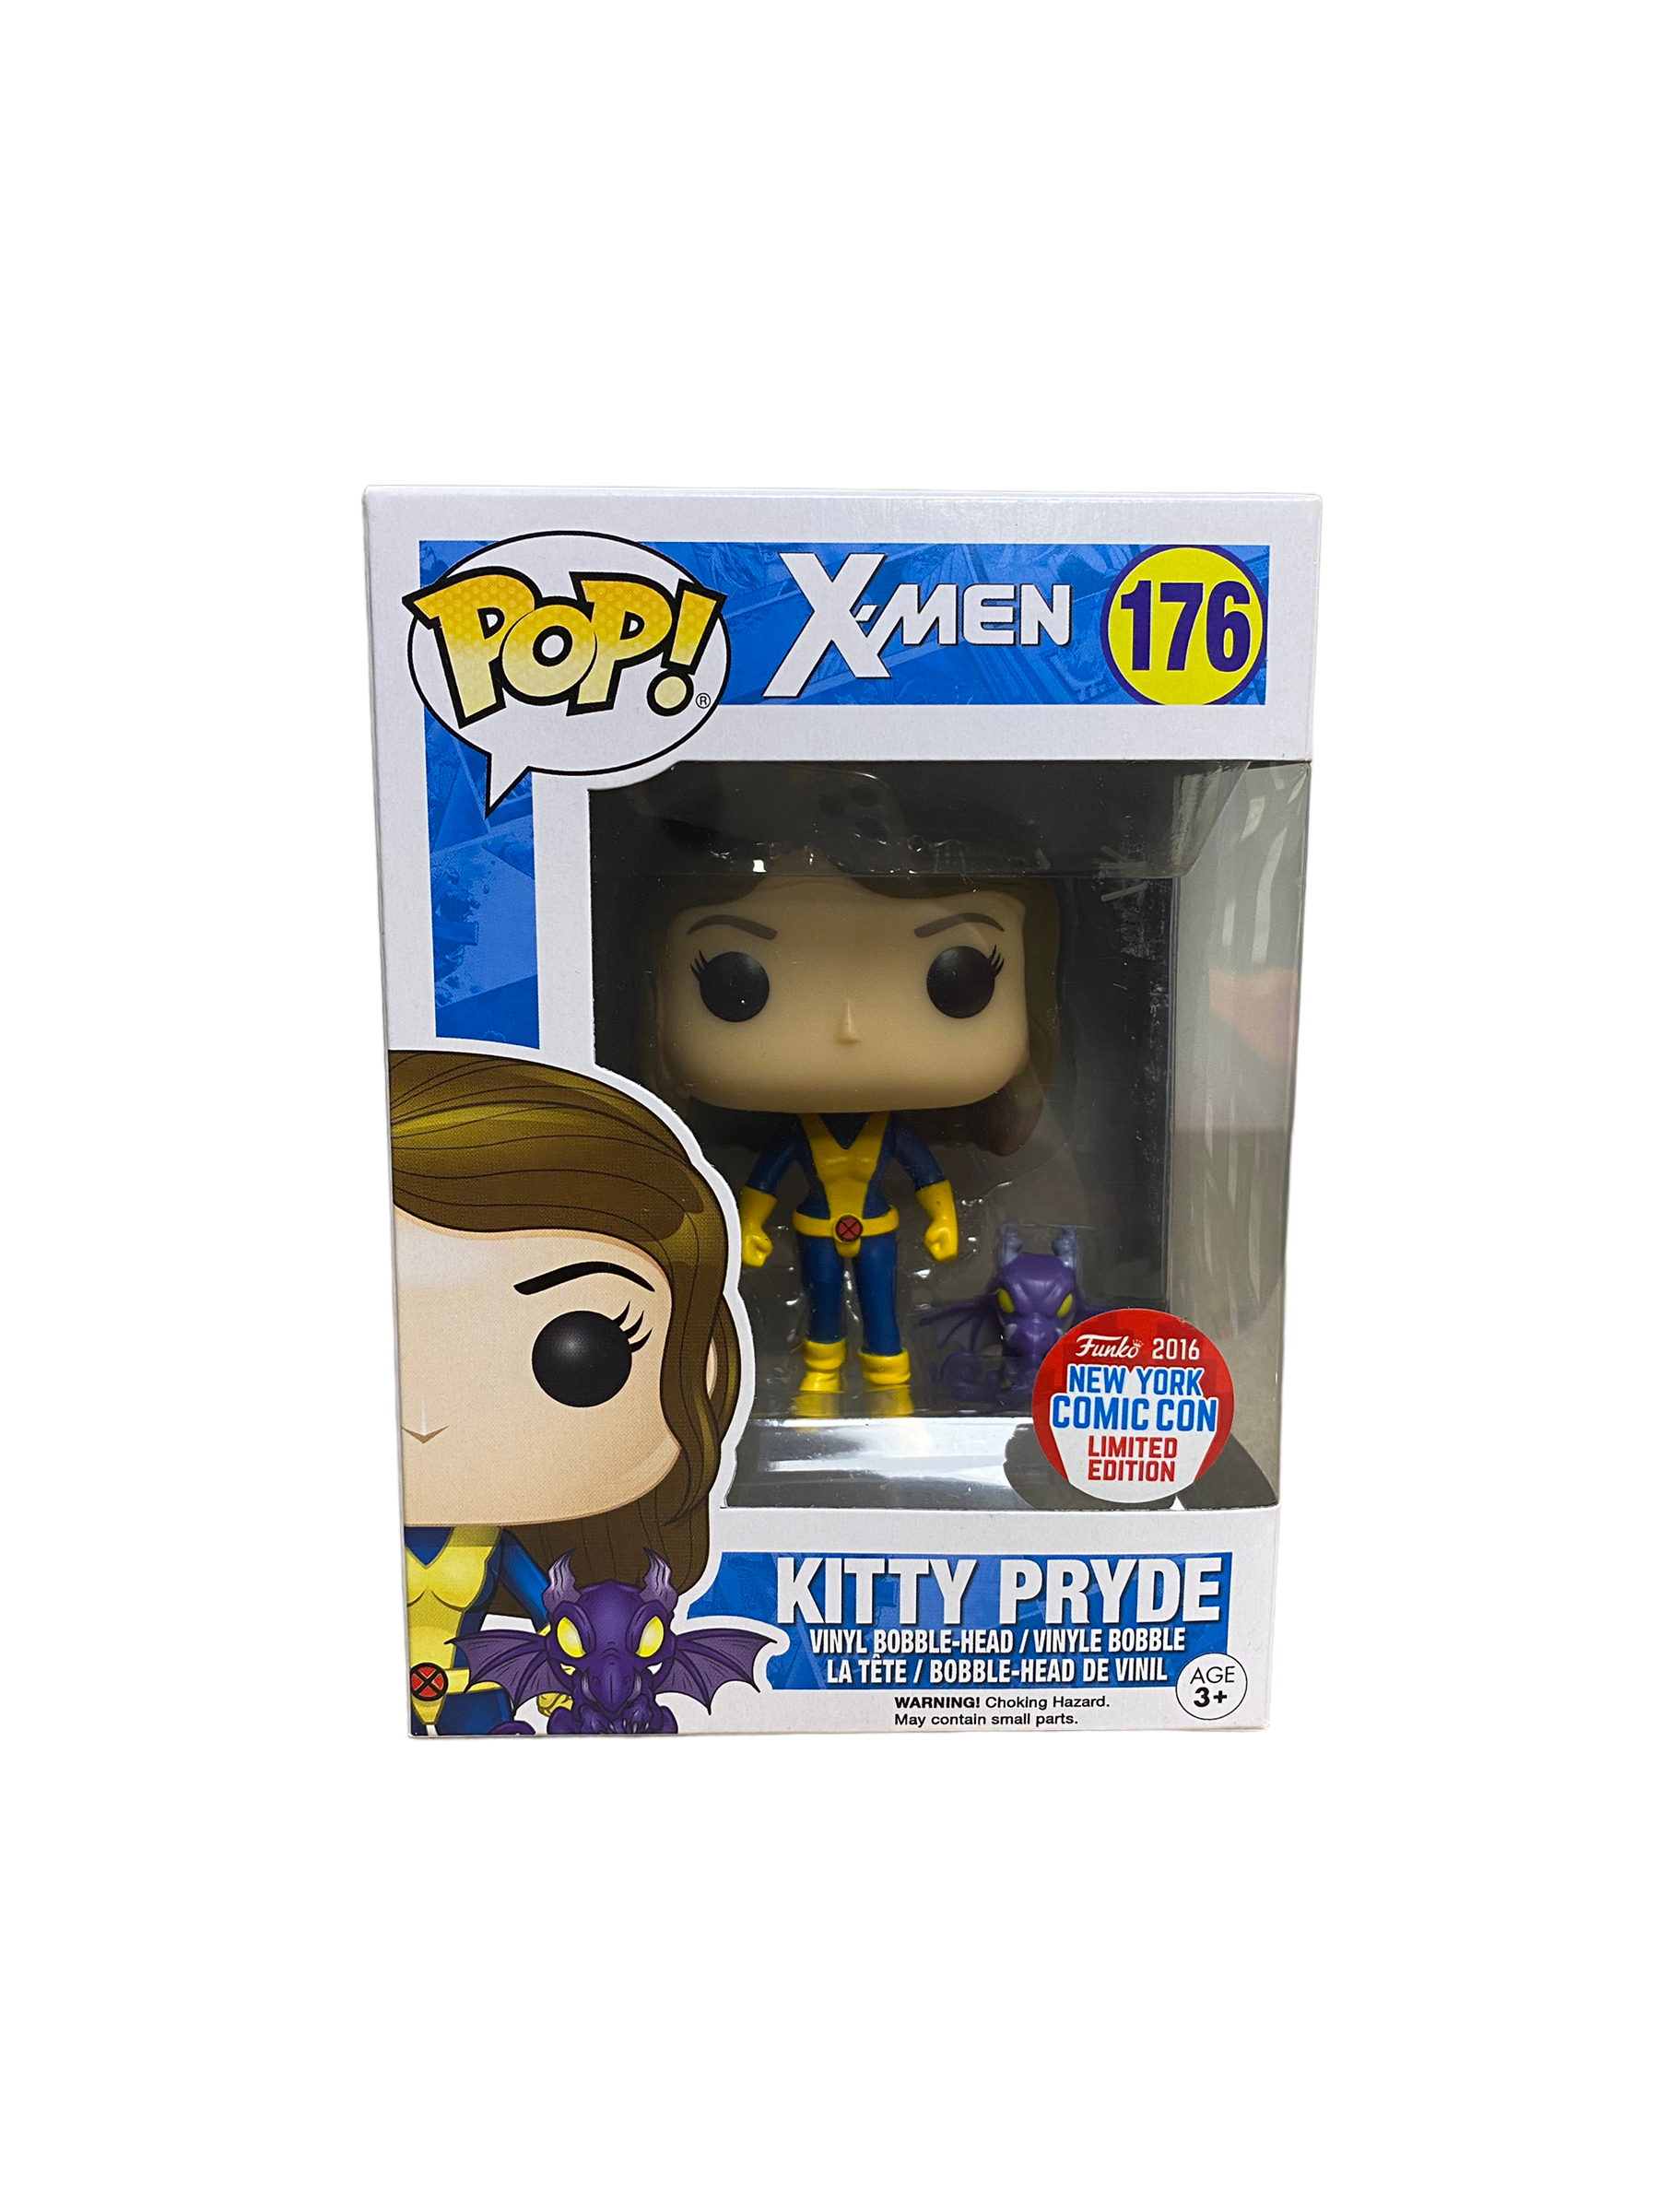 Kitty Pryde #176 (w Lockheed) Funko Pop! - X-Men - NYCC 2016 Exclusive - Condition 9/10